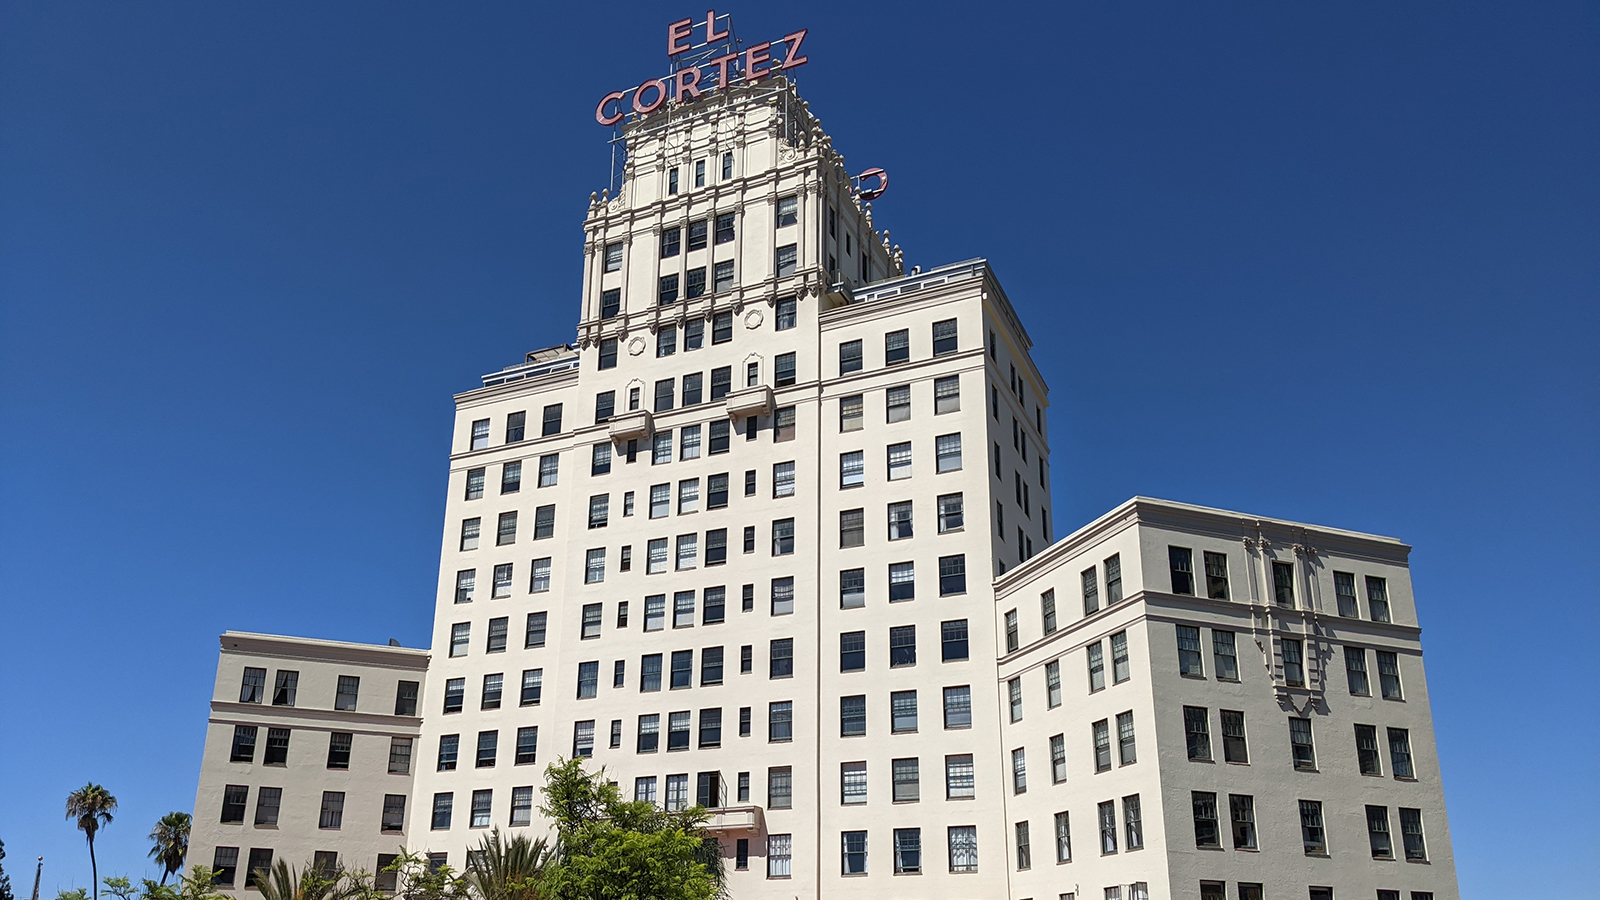 San Diego, California - August 02, 2021: El Cortez Condominiums on Ash Street, formerly known as El Cortez Hotel